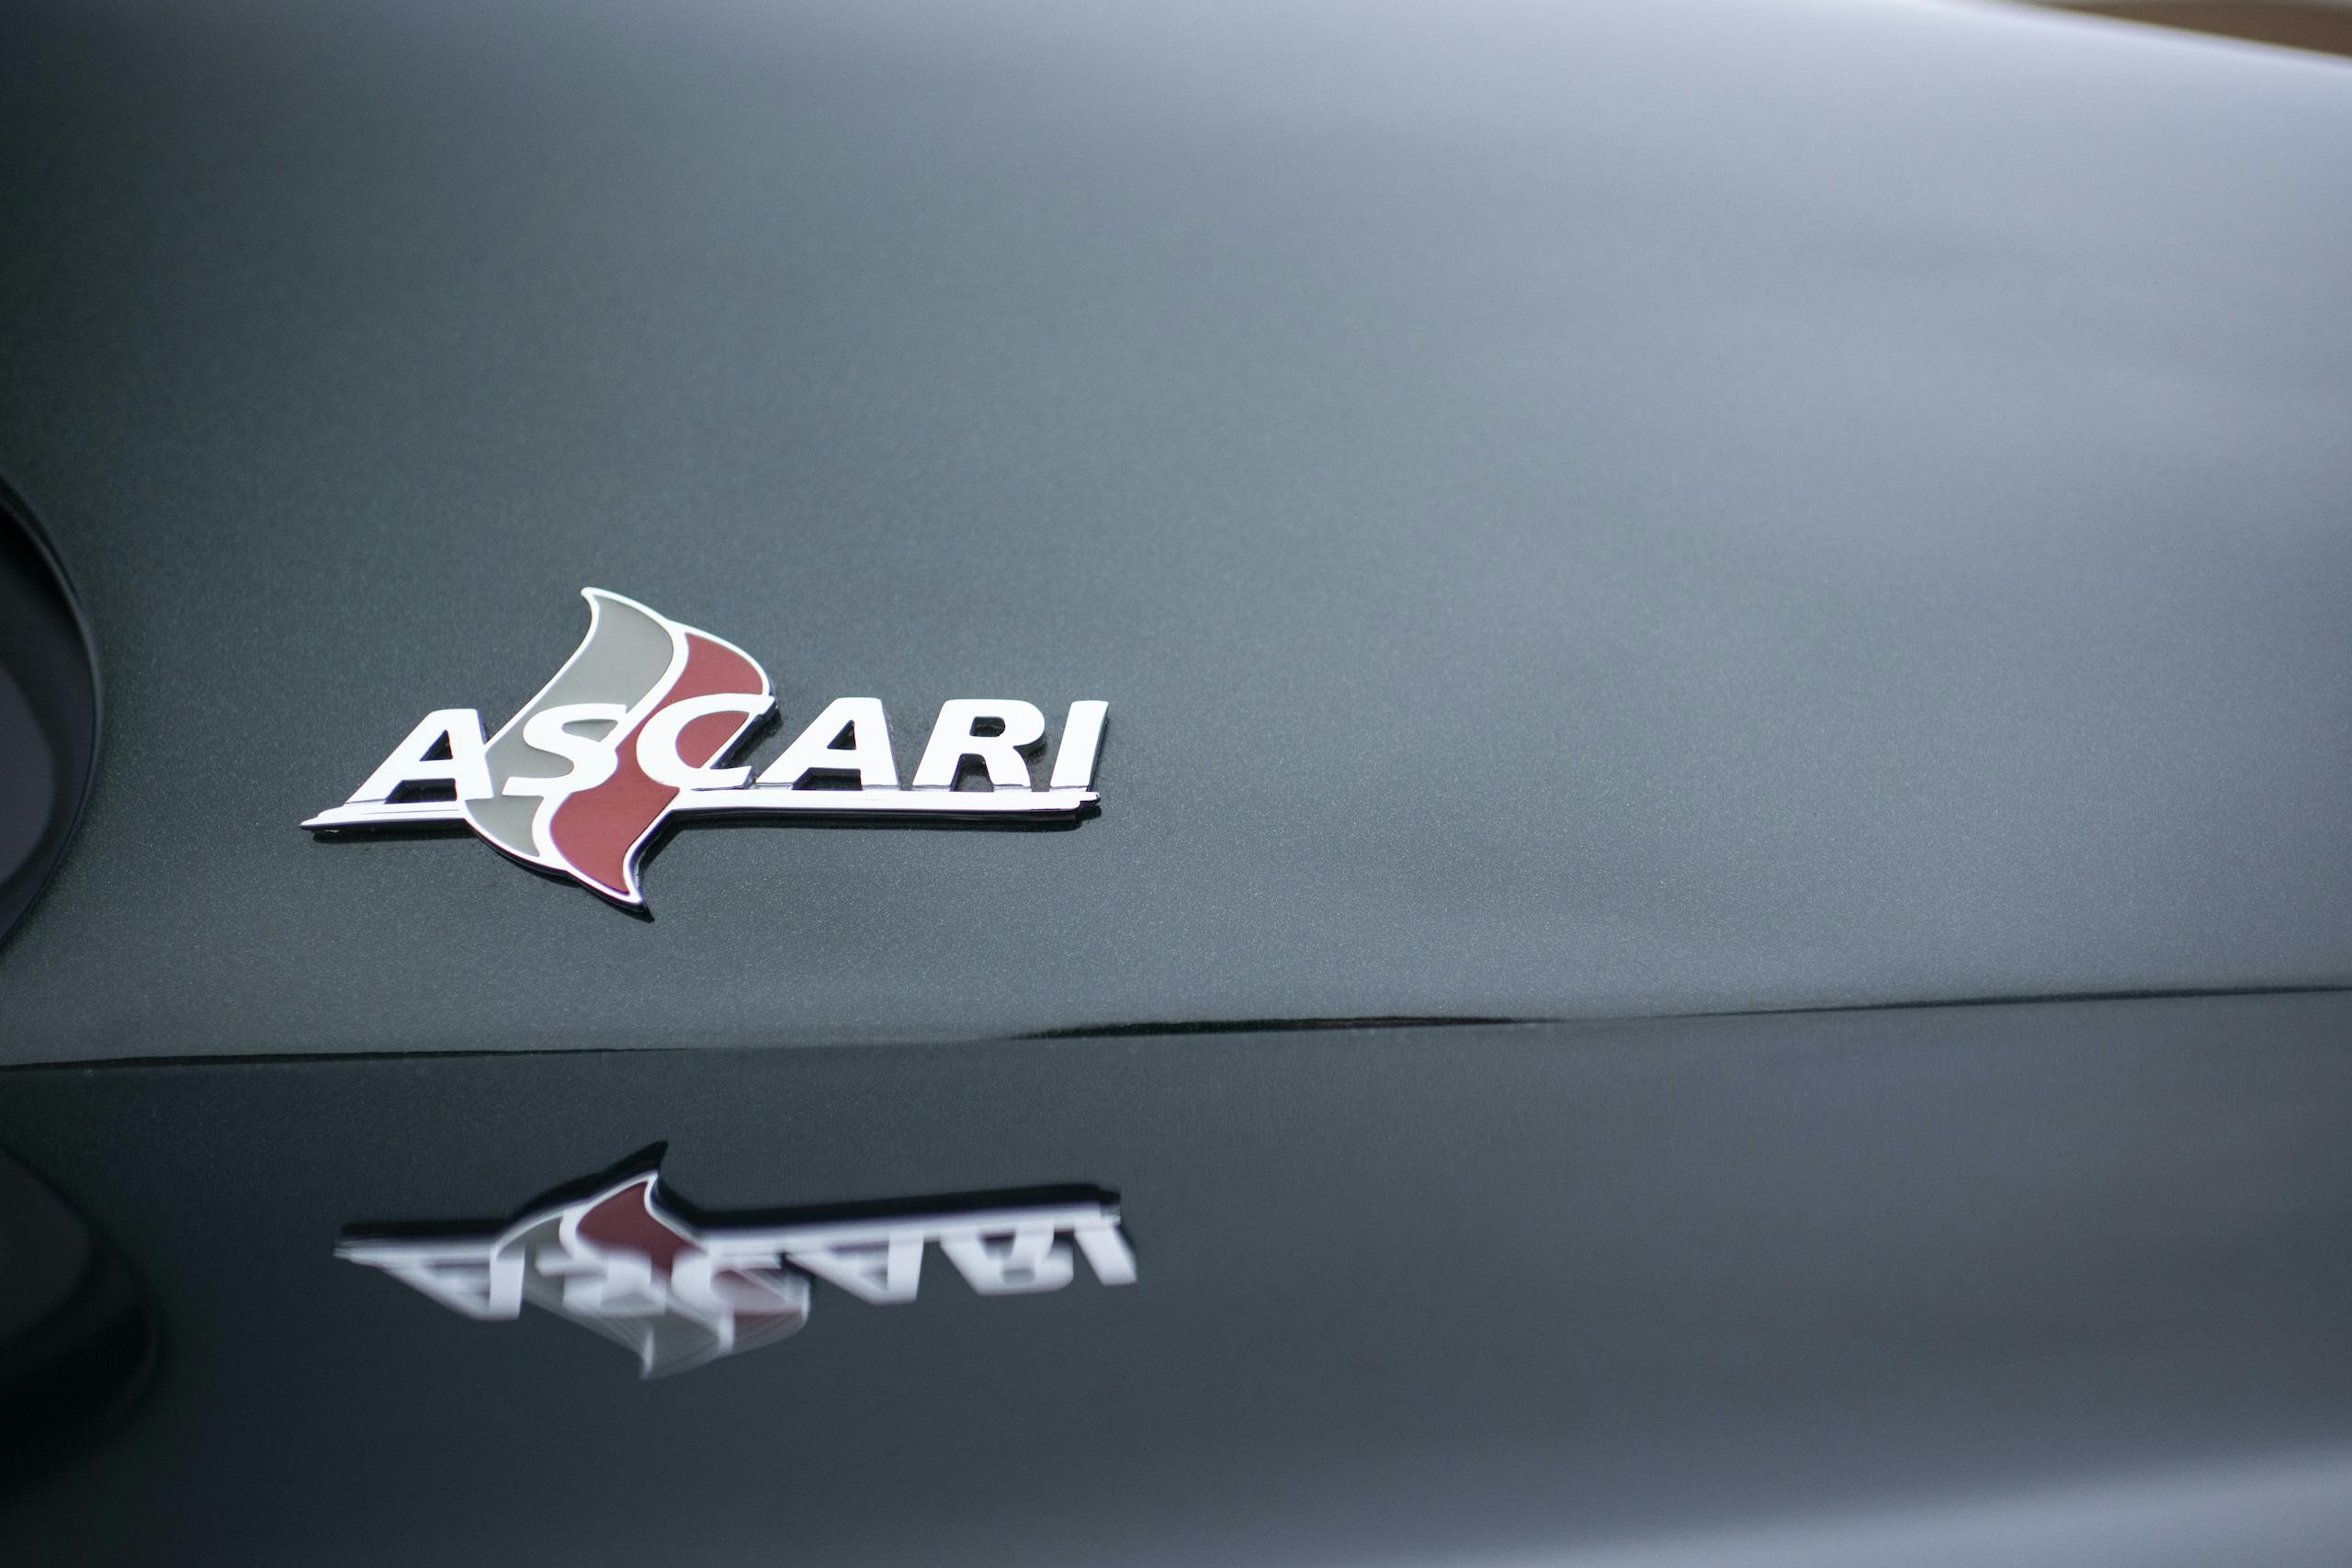 1997 Ascari Ecosse badge detail